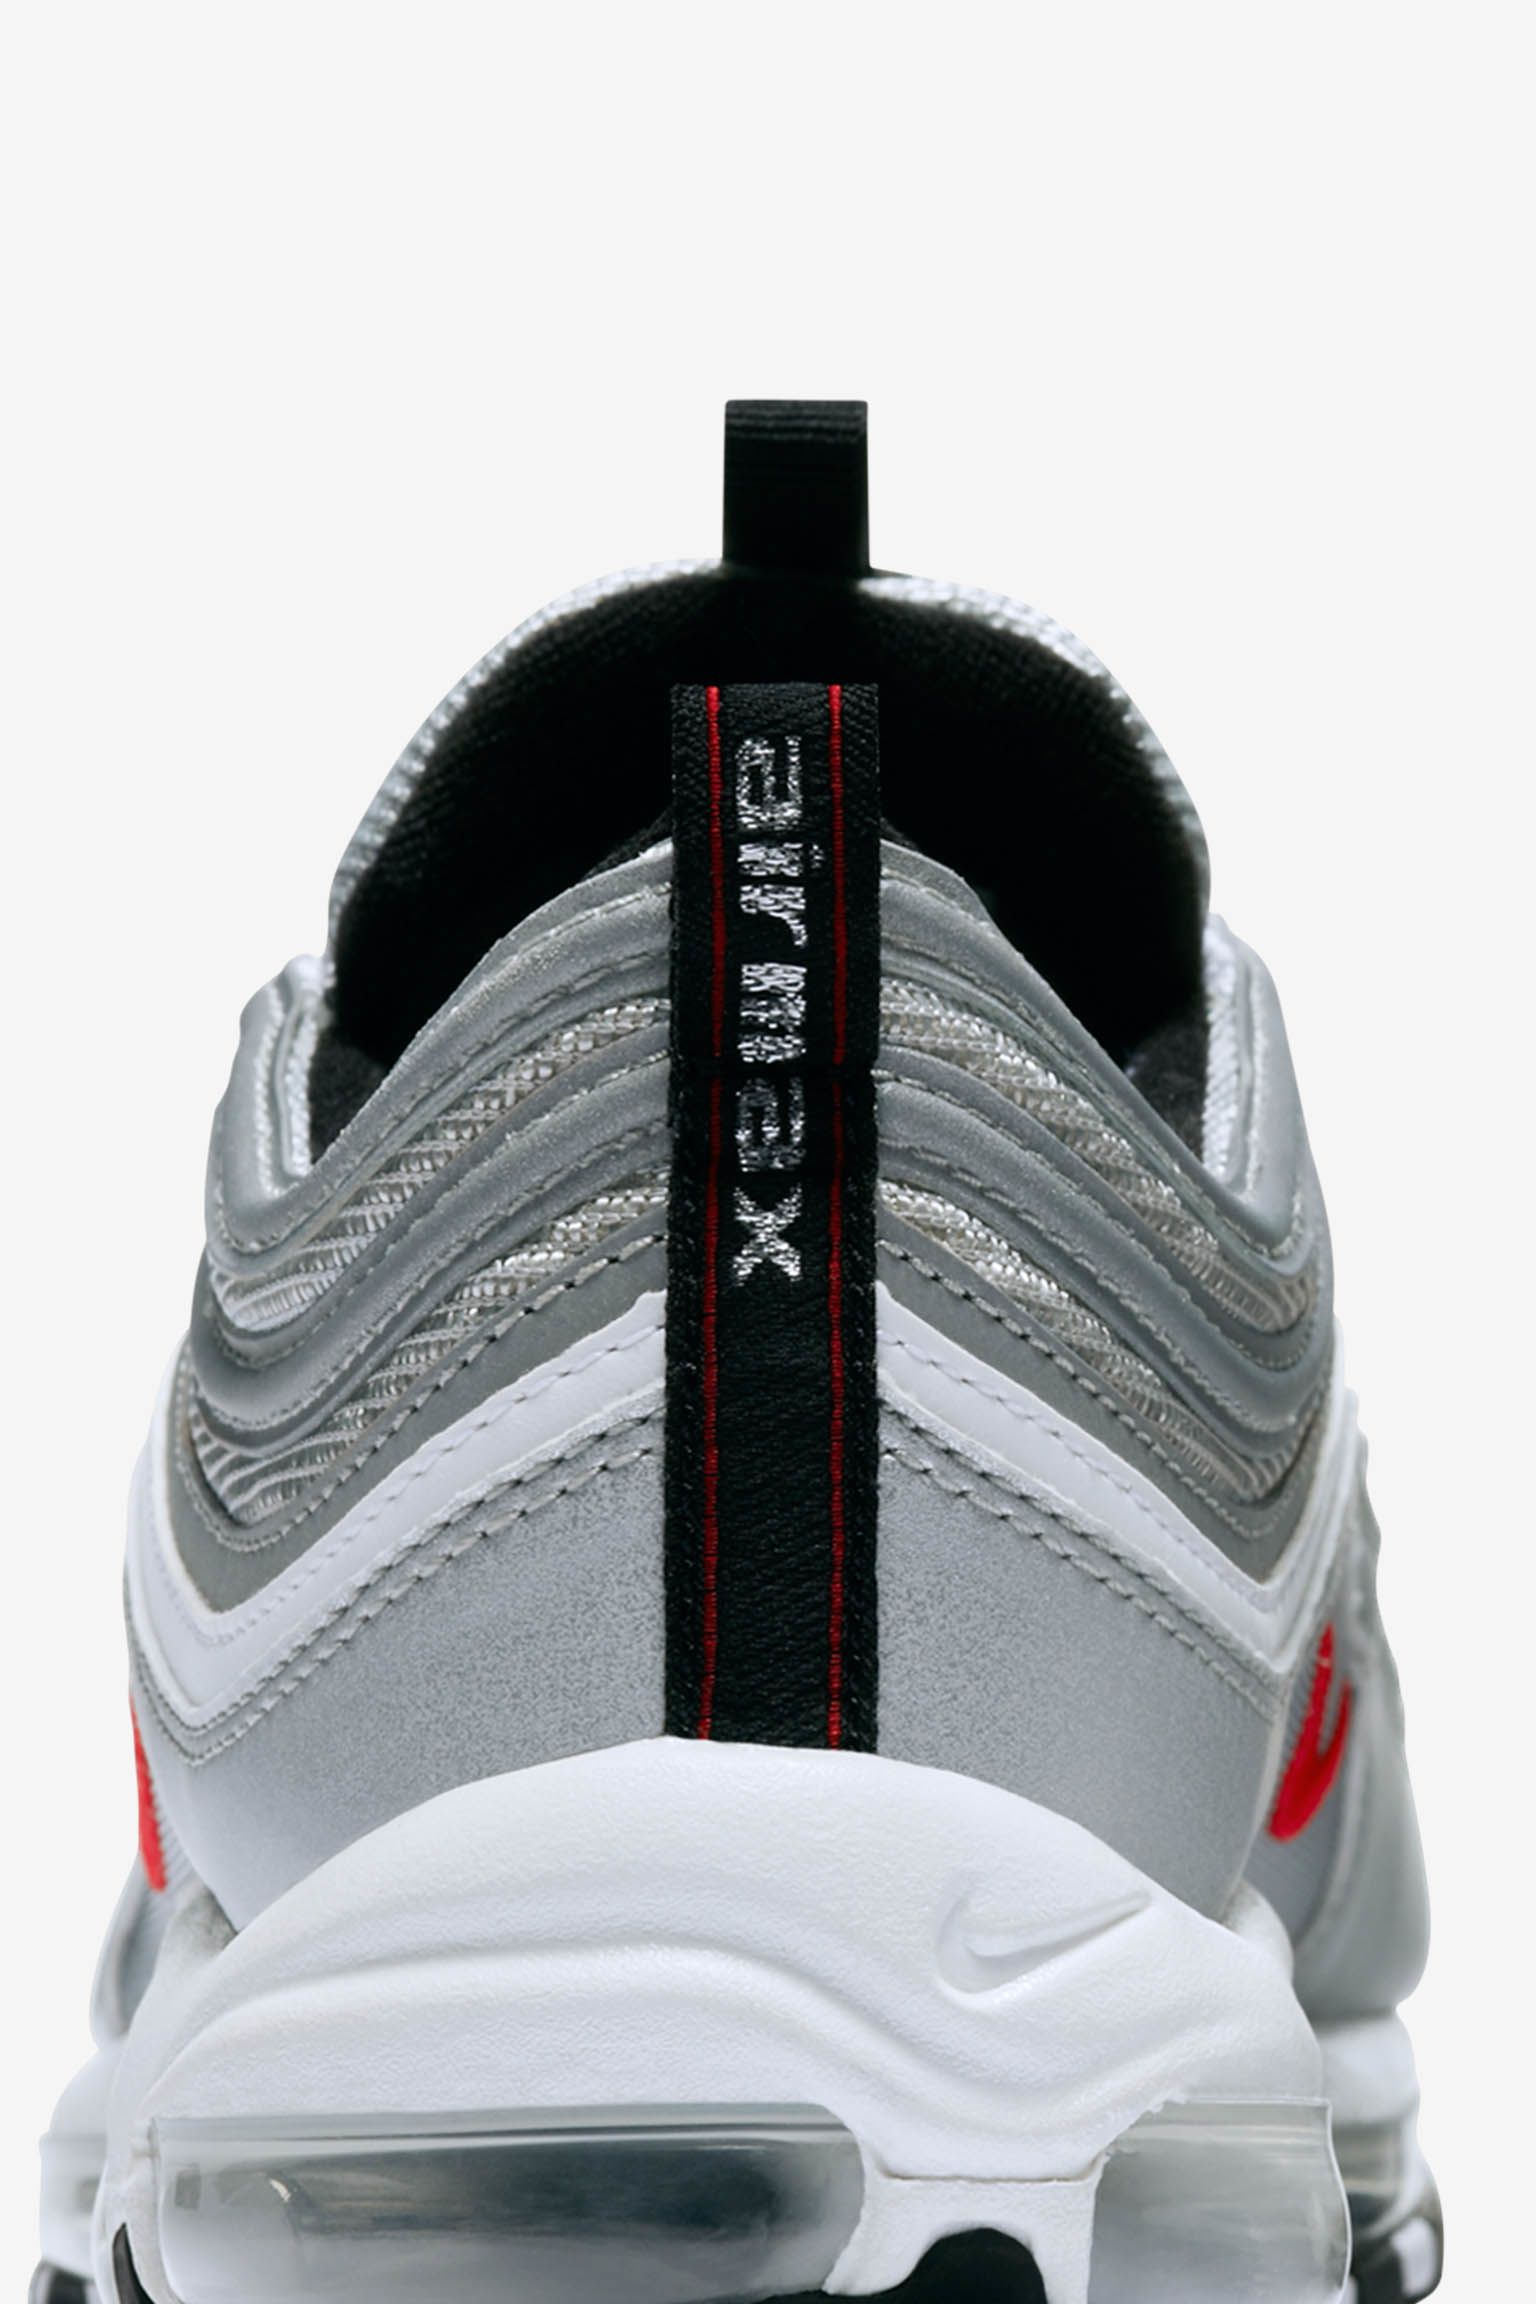 Nike Air Max 97 OG 'Metallic Silver'. Nike SNKRS ثلاجة باناسونيك بابين